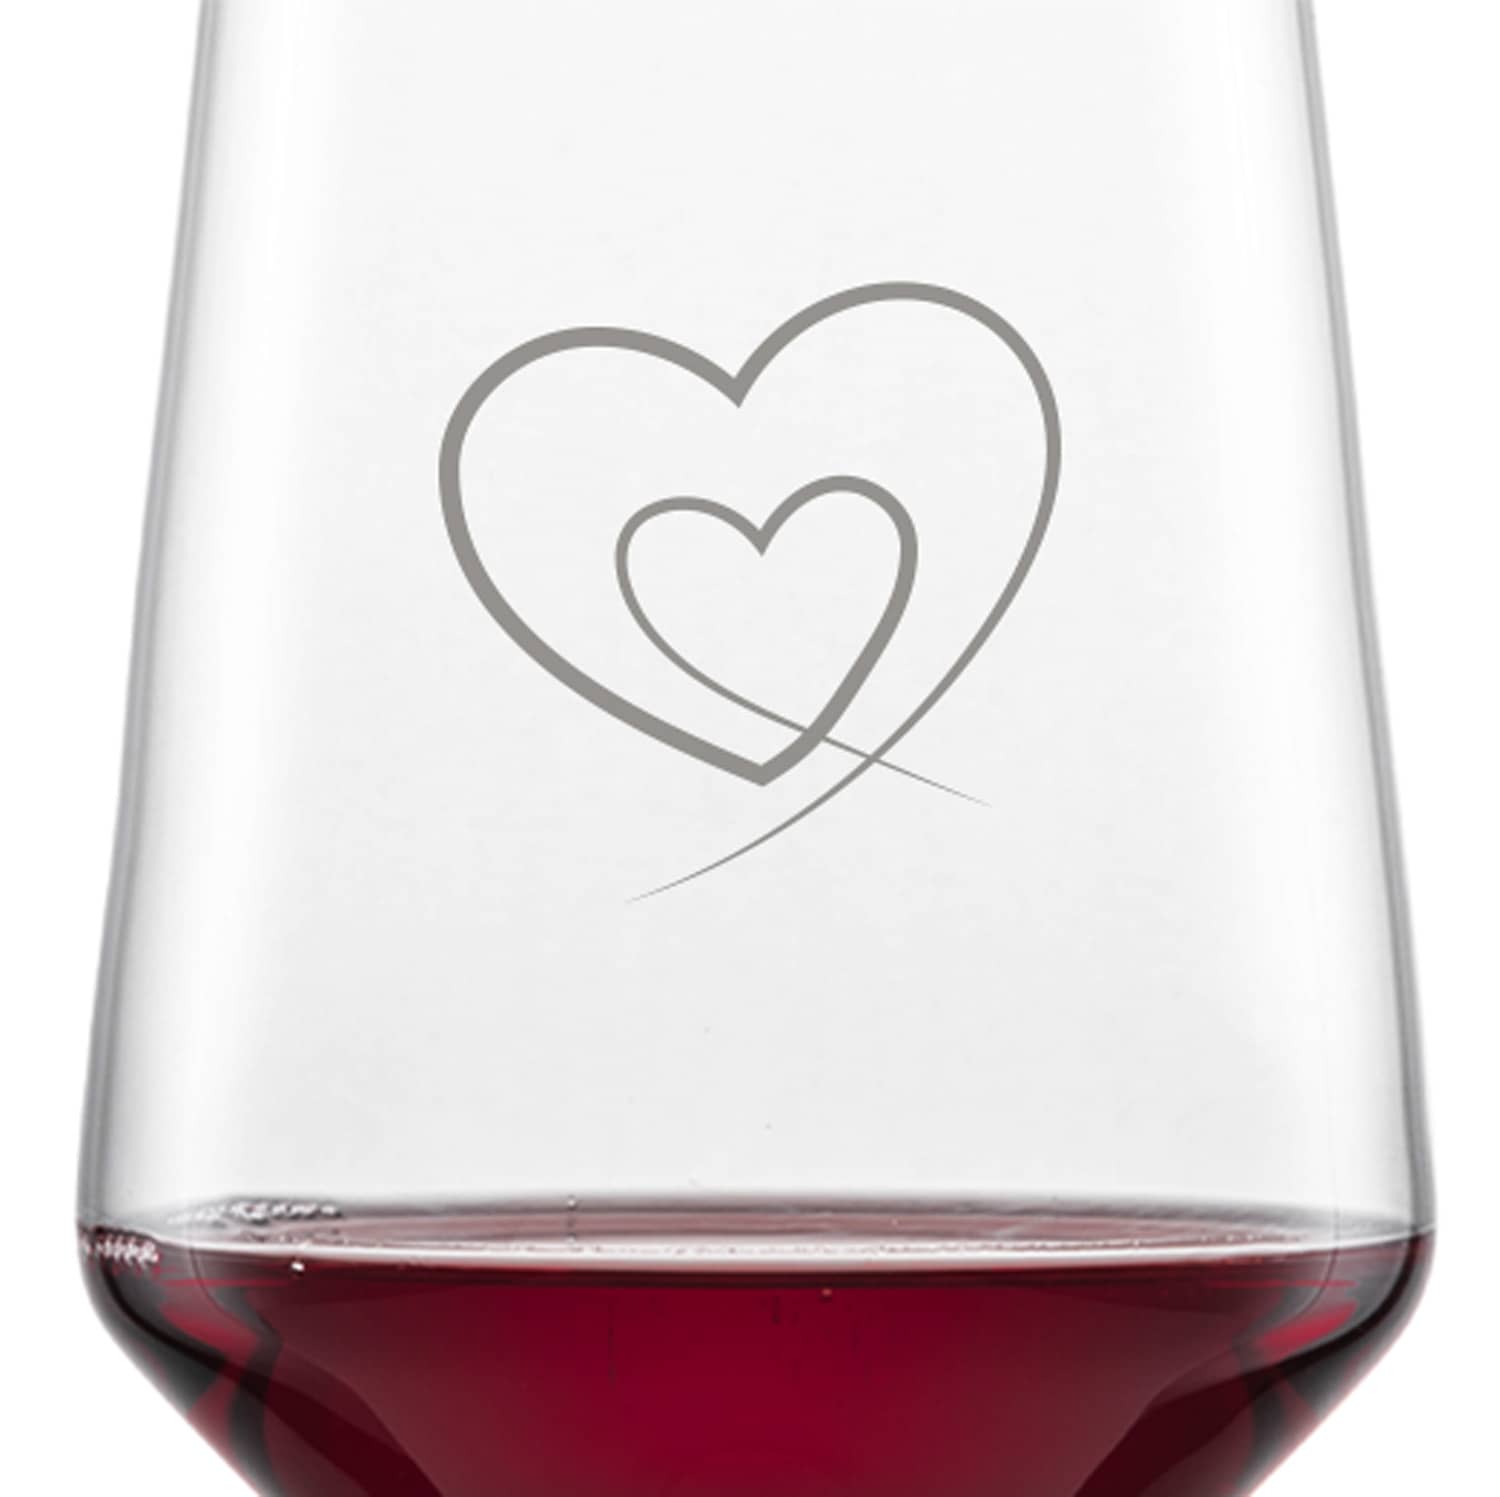 Schott Zwiesel Bordeaux Rotweinglas PURE mit Namen oder Wunschtext graviert (2 Herzen)